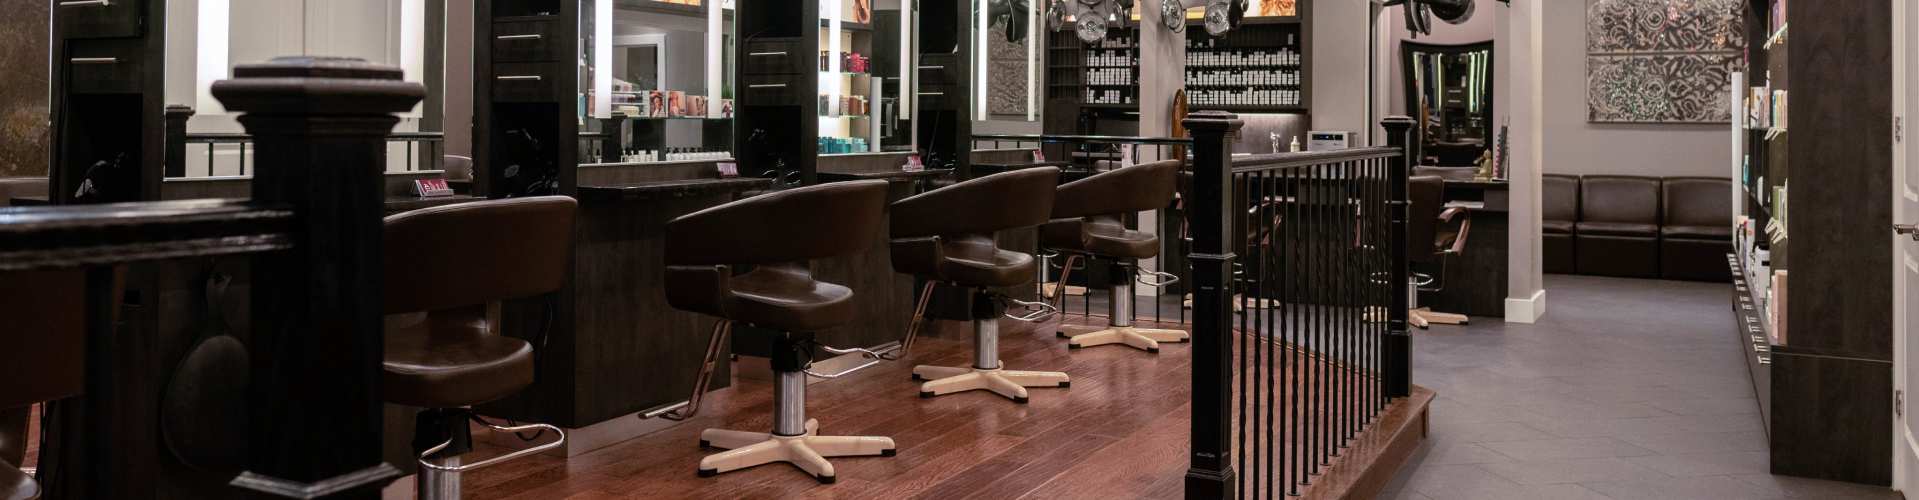 Professional Team of Hairstylists | Salon Dolce Vita